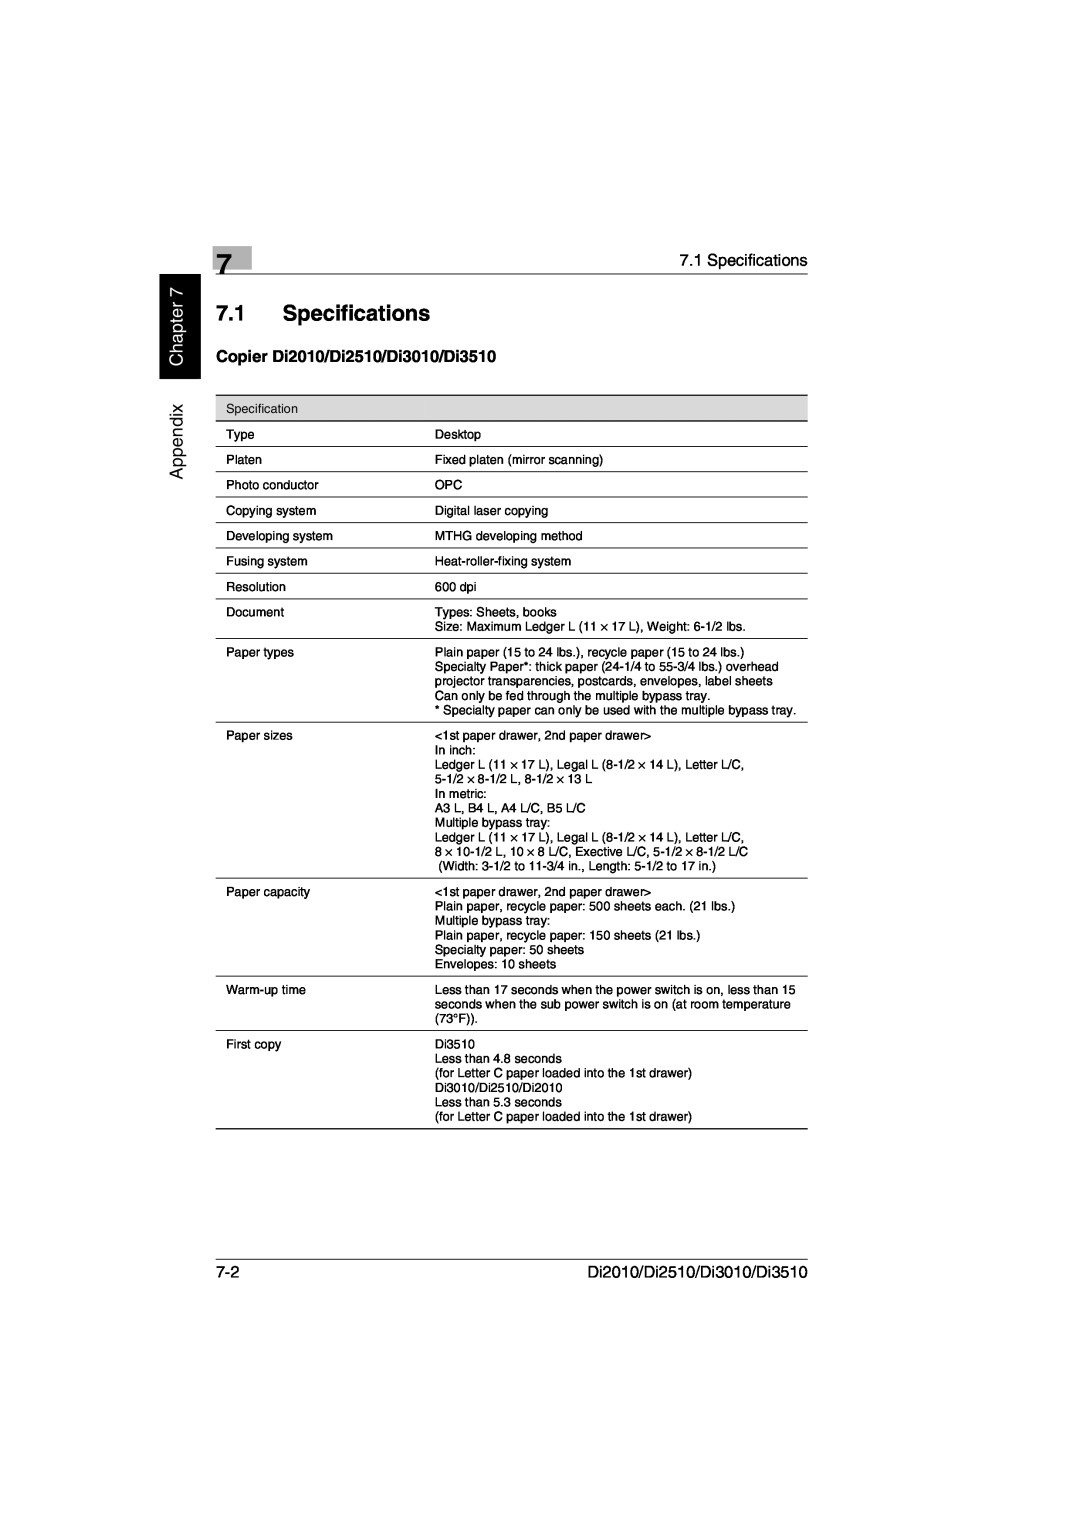 Minolta DI2510, DI2010, DI3010 user manual Specifications, Appendix Chapter, Copier Di2010/Di2510/Di3010/Di3510 